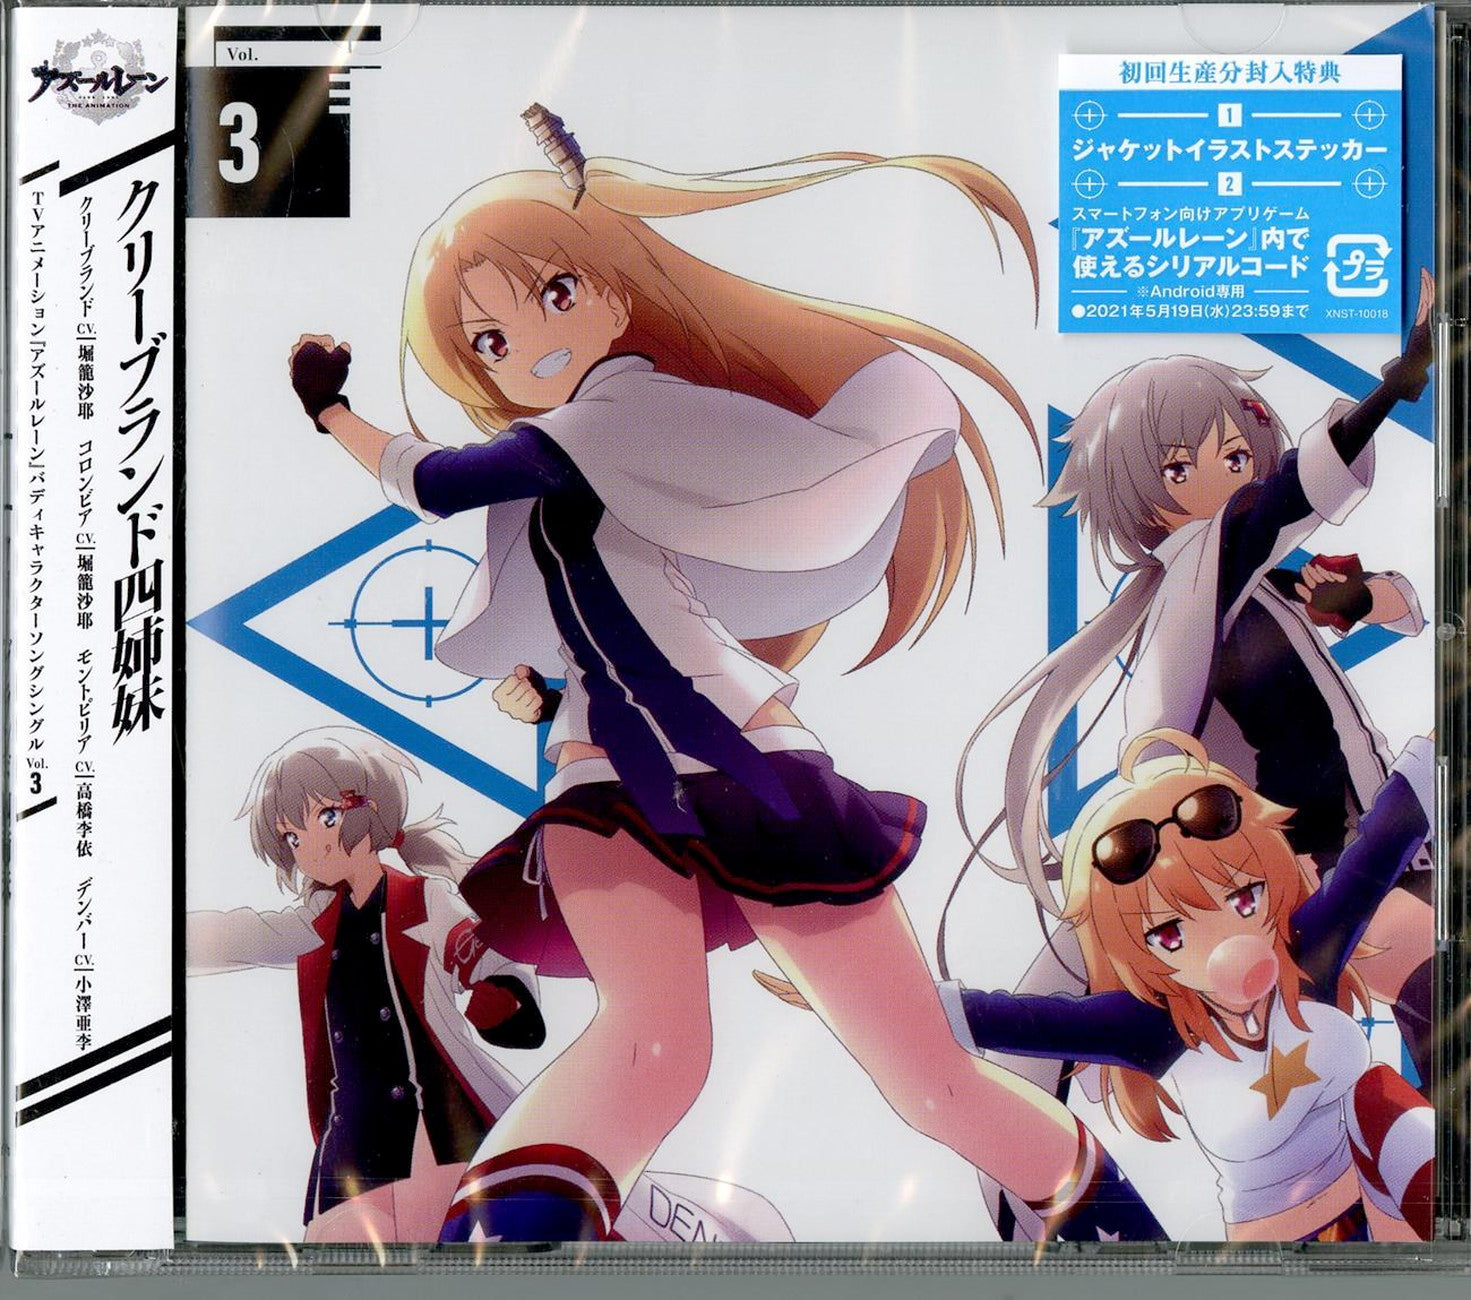 TV Anime IS Drama CD Vol. 3